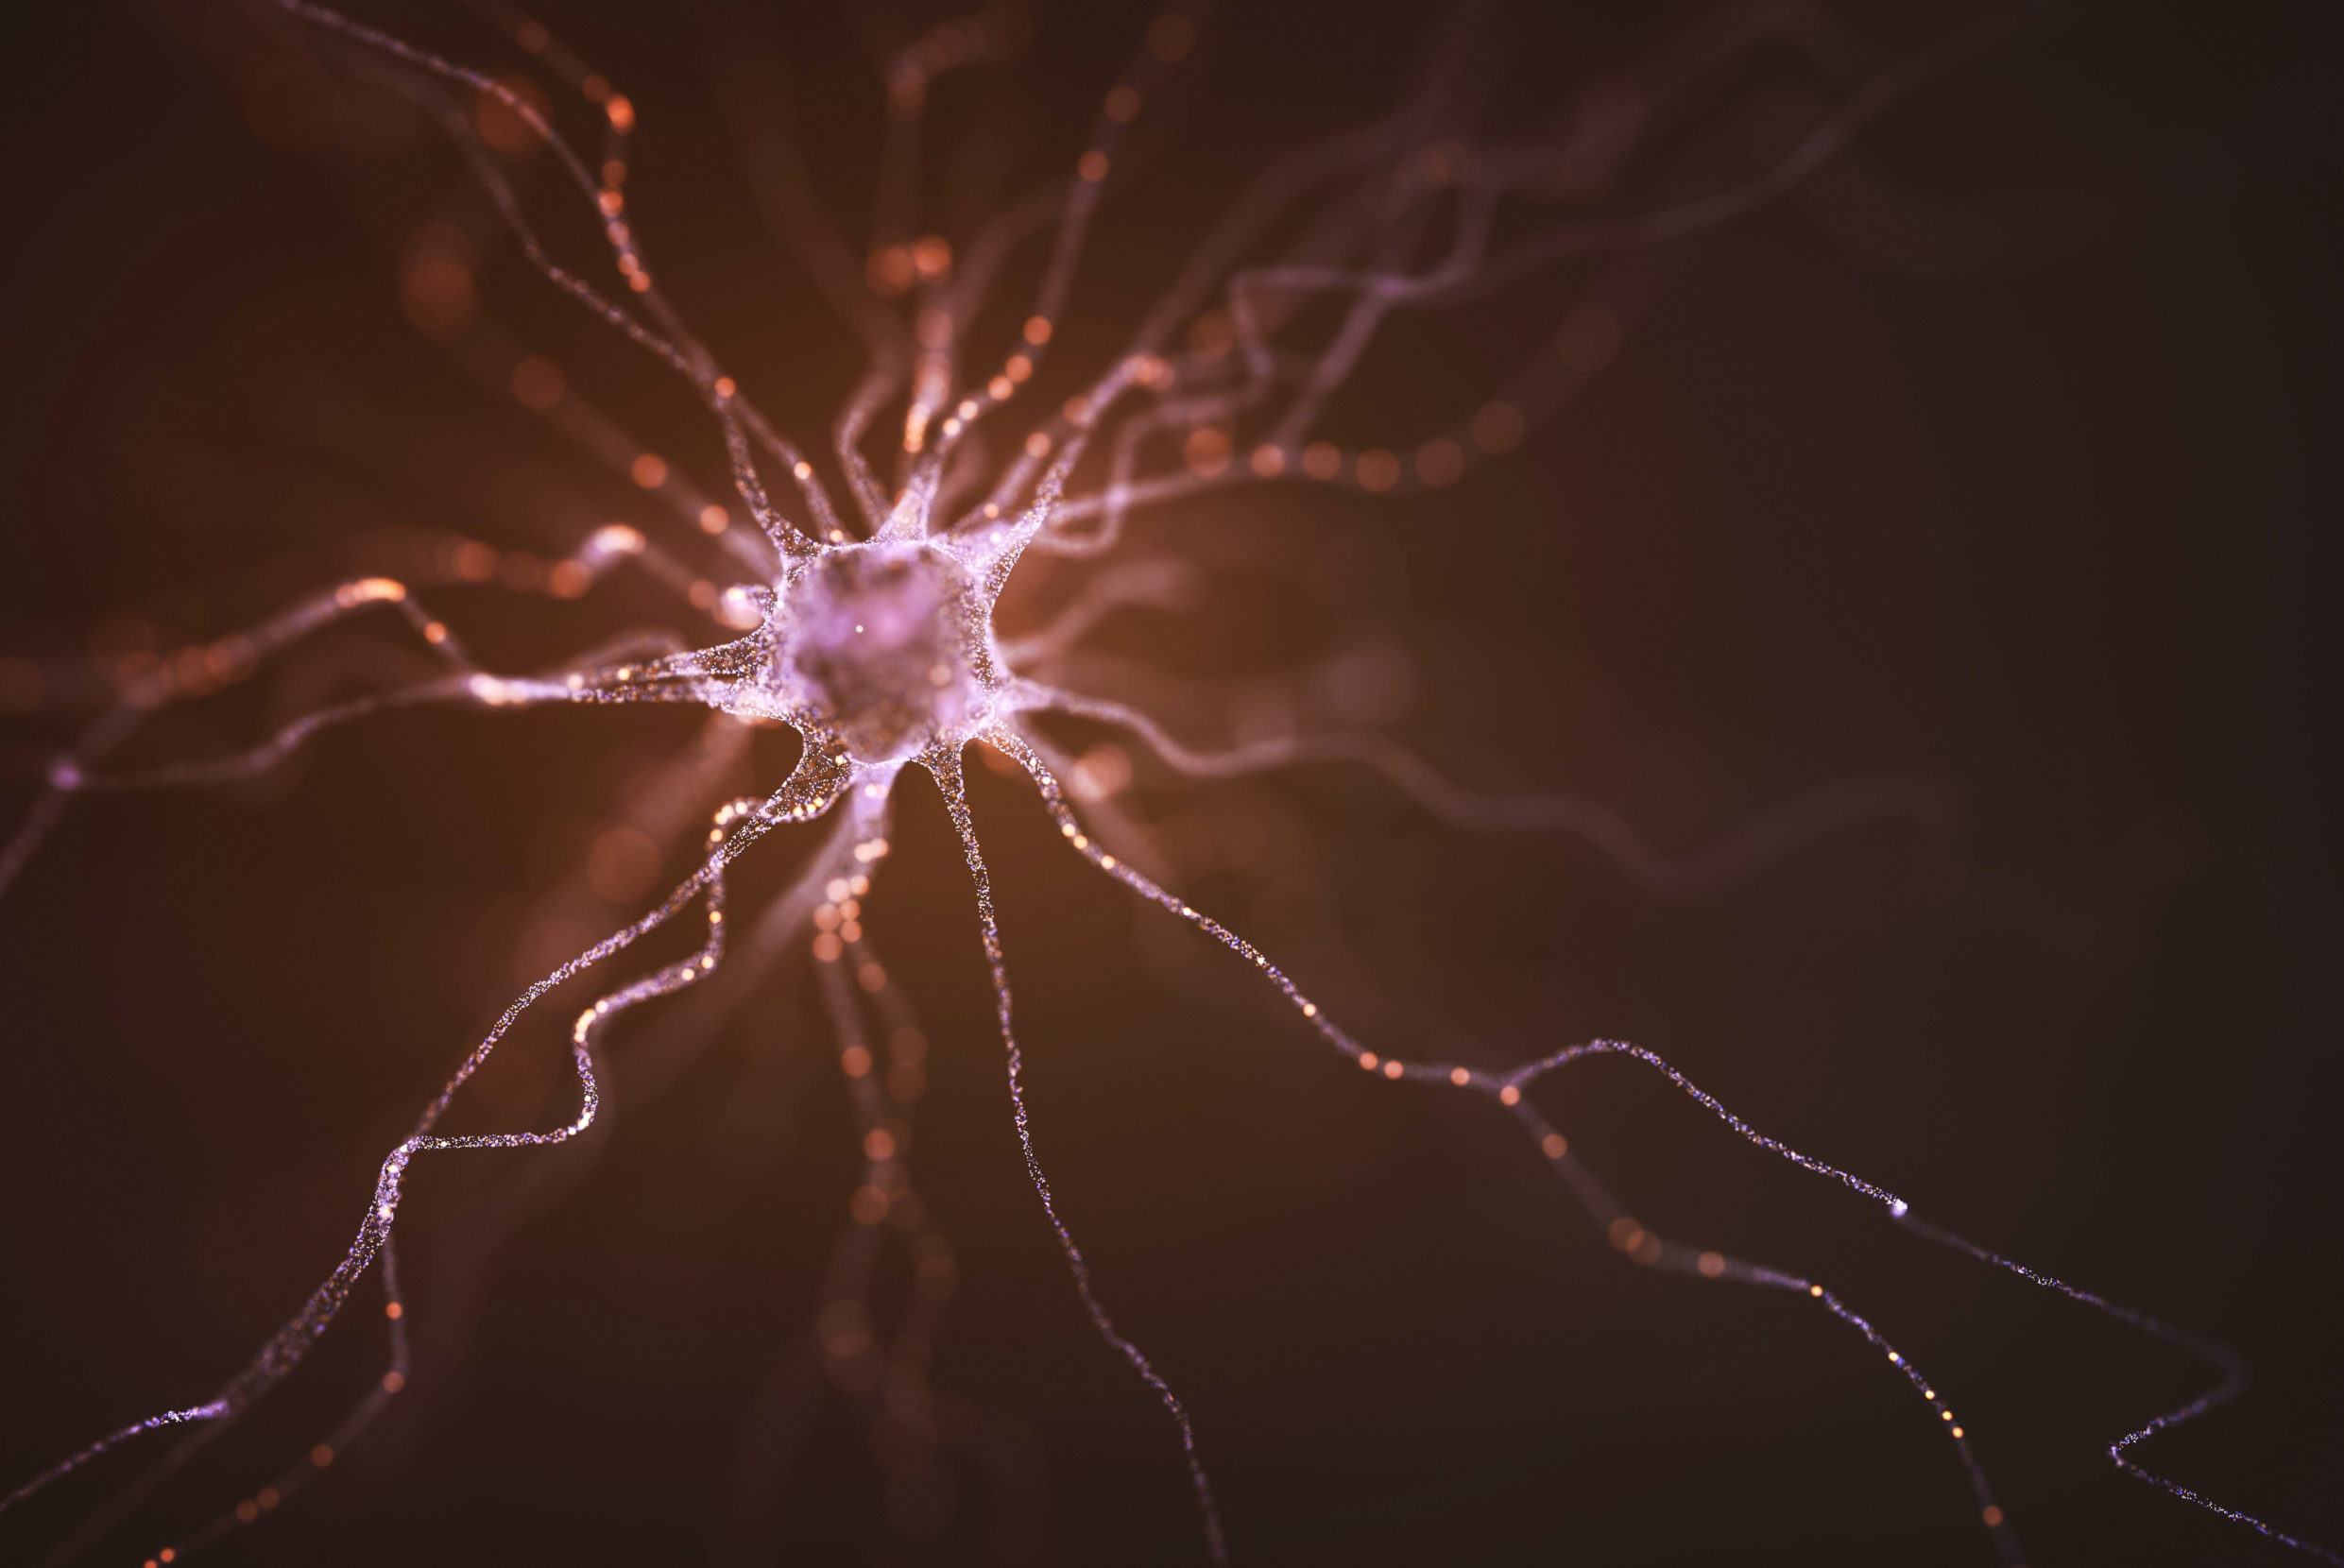 In this conceptual image, an electric charge energizes a neuron. Photo: Kiyoshi Takahase Segundo/Alamy.